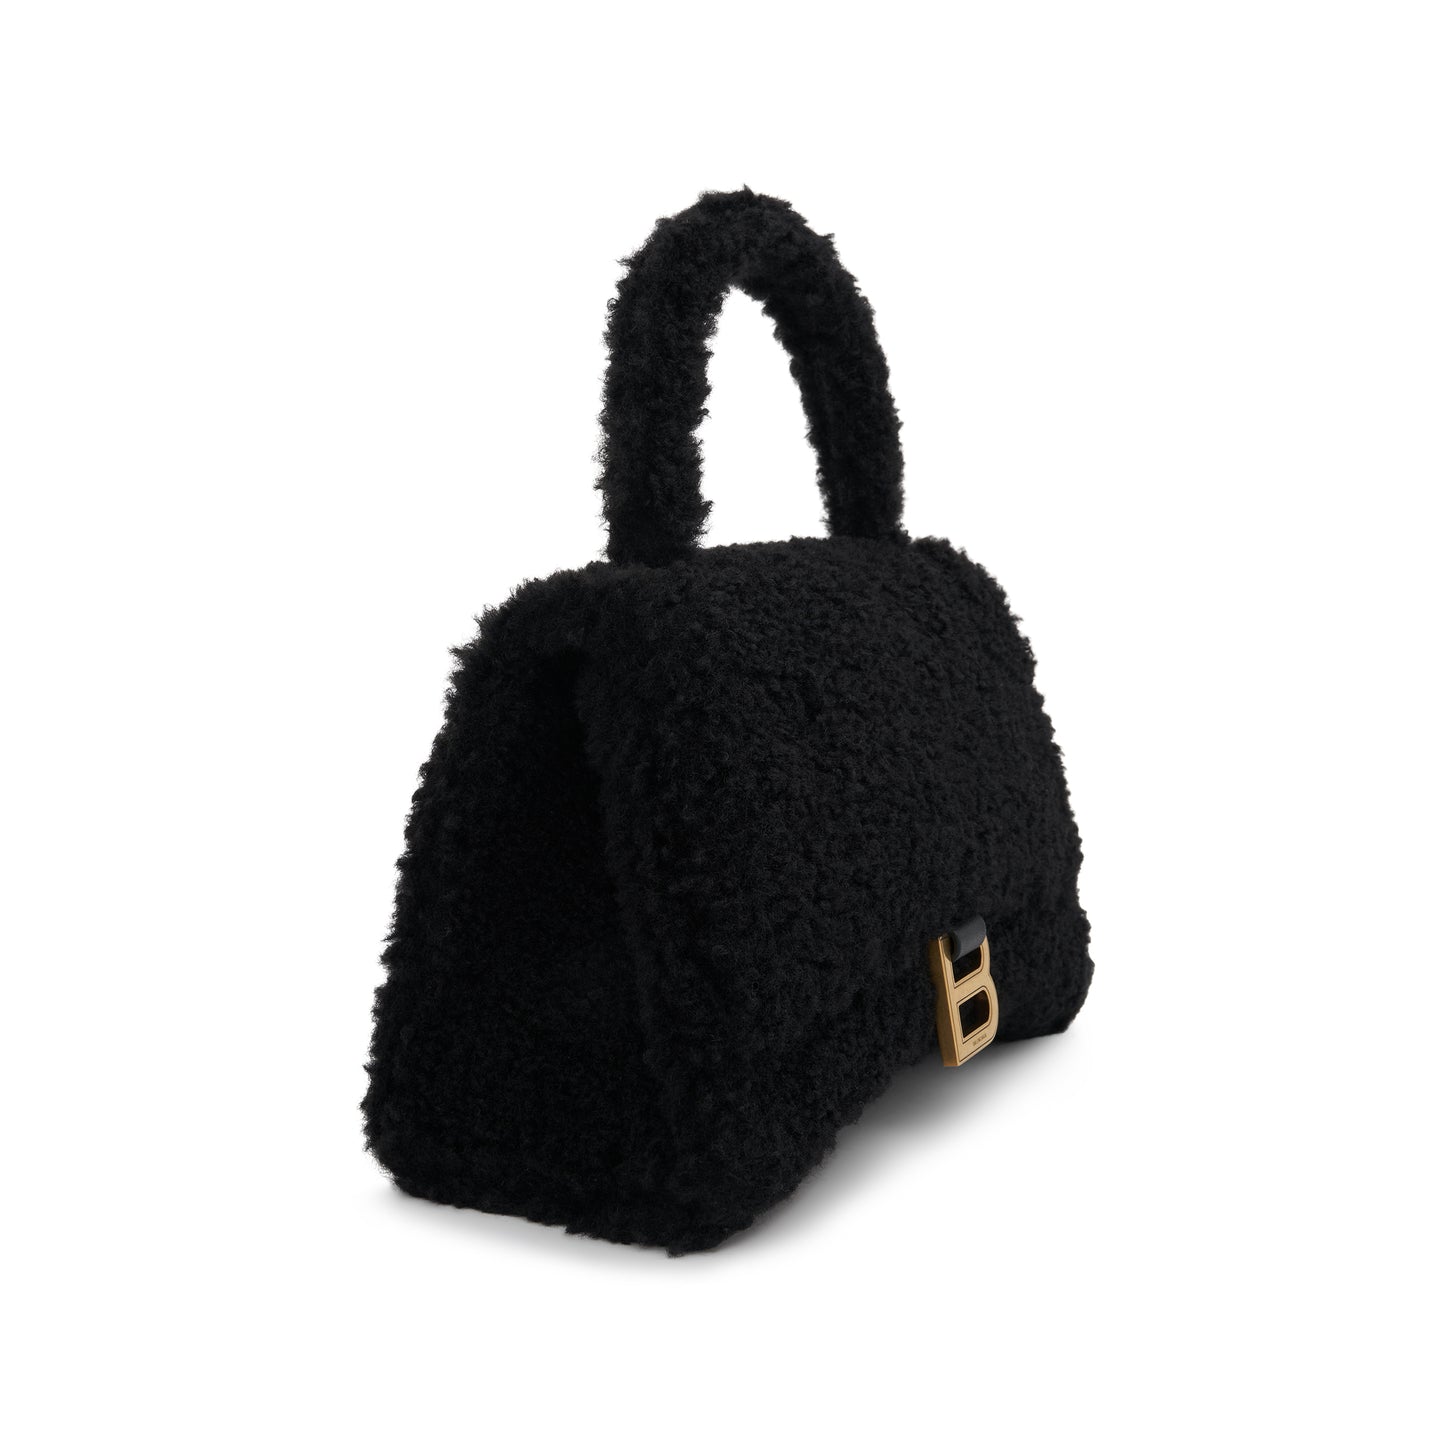 Furry Hourglass Small Handbag in Black